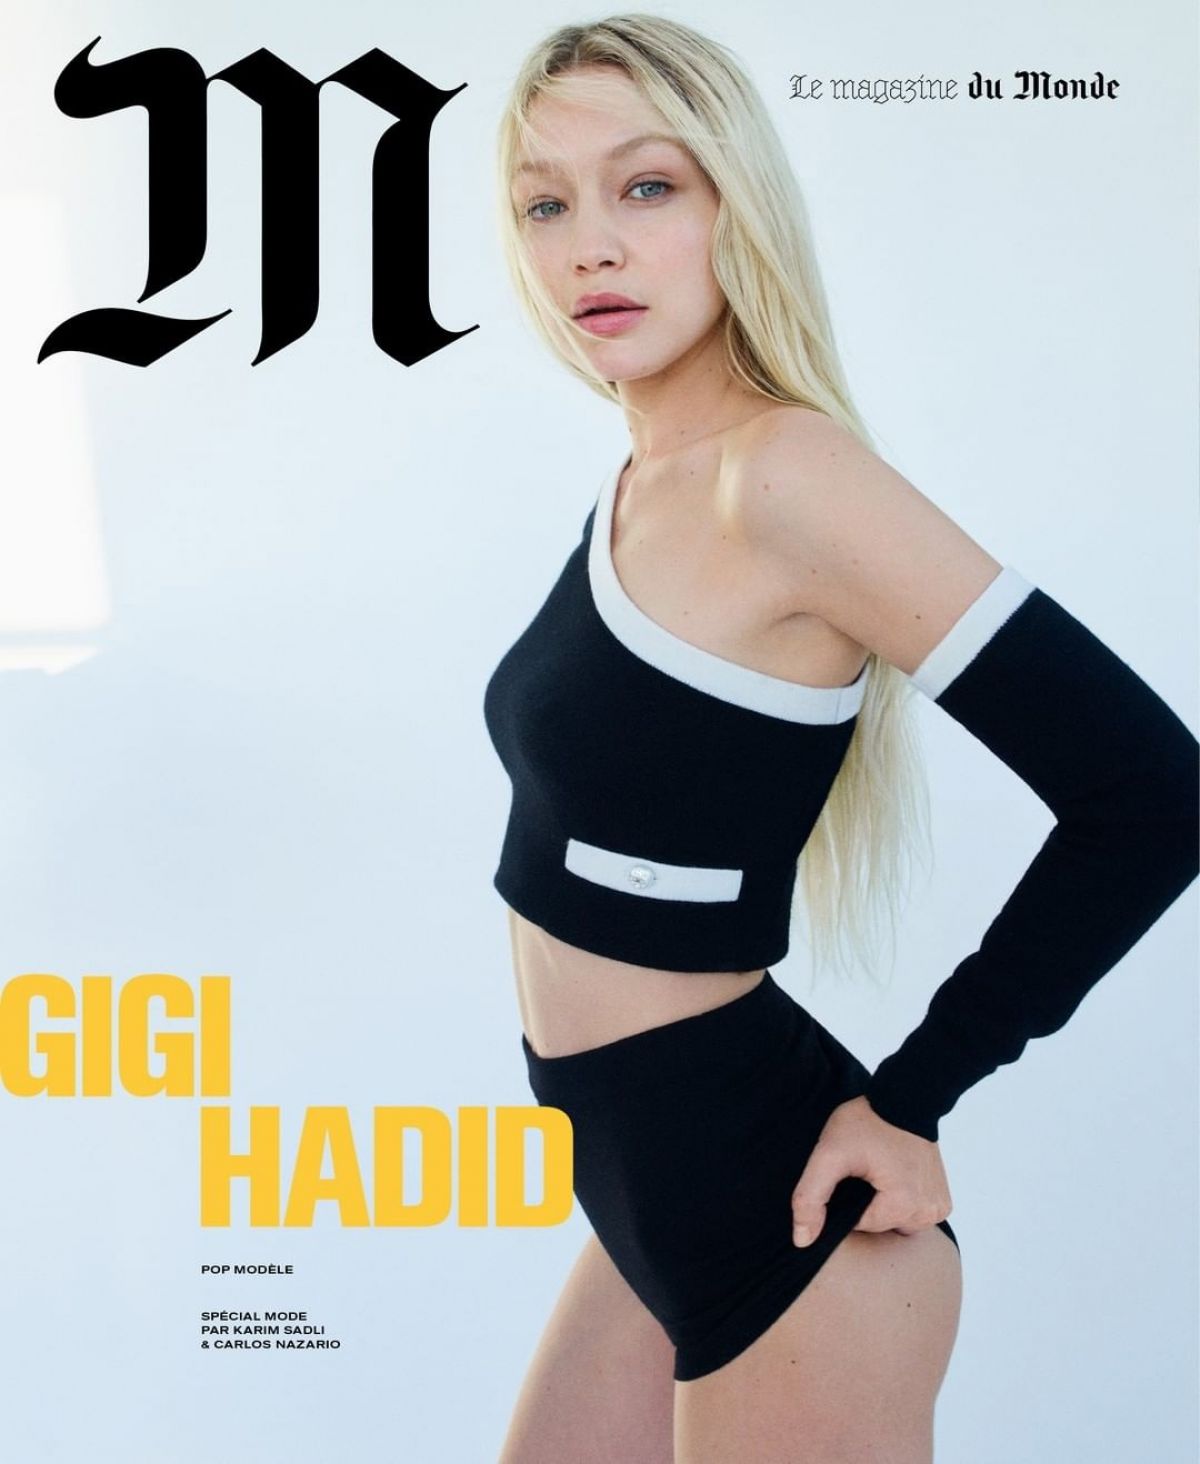 Gigi Hadid for M Le Magazine Du Monde, March 2023